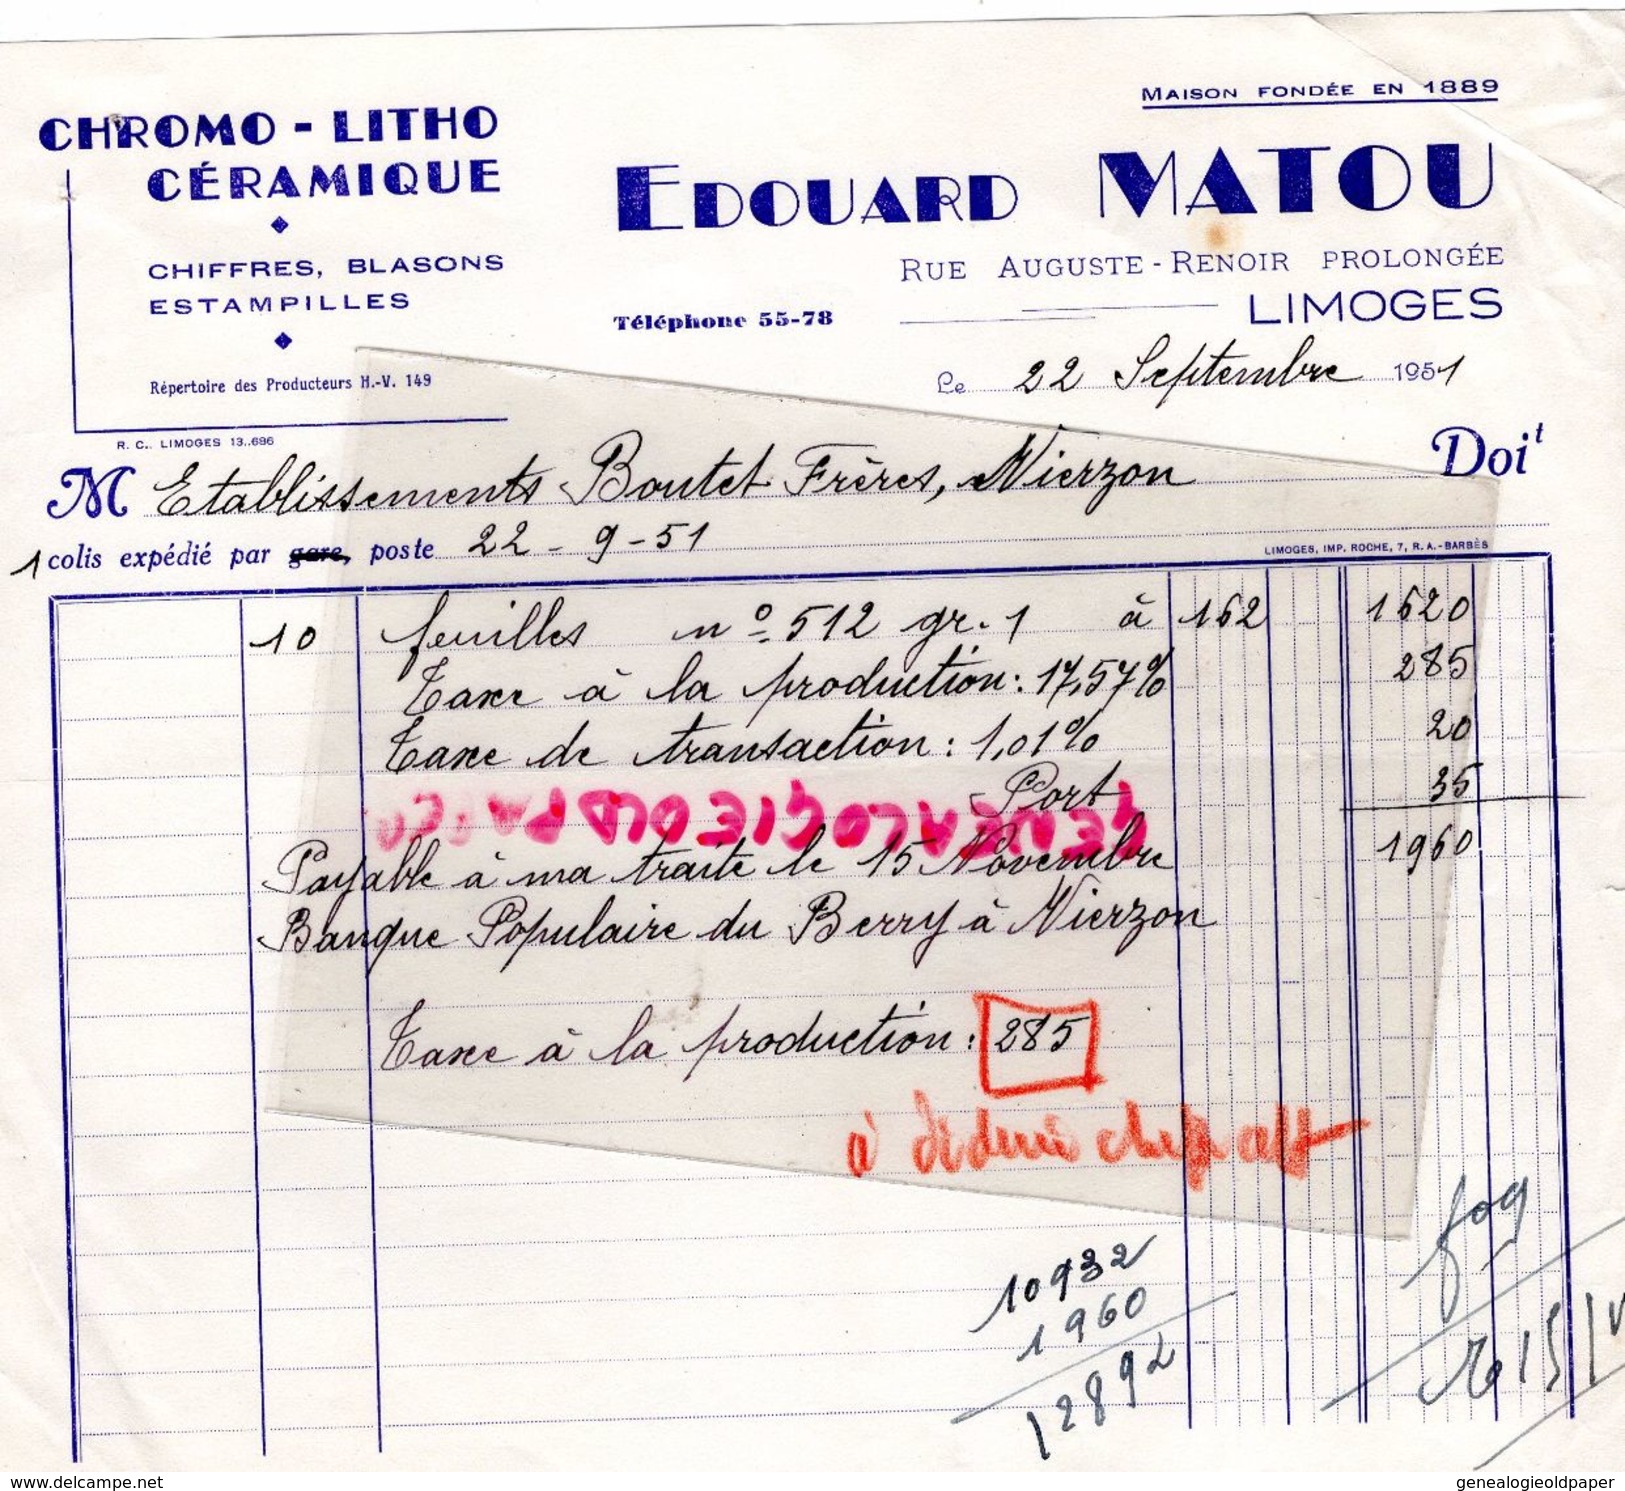 87- LIMOGES- FACTURE EDOUARD MATOU- CHROMO LITHO CERAMIQUE- JOUBERT CALINAUD- 4 RUE AUGUSTE RENOIR PROLONGEE- 1951 - Druck & Papierwaren